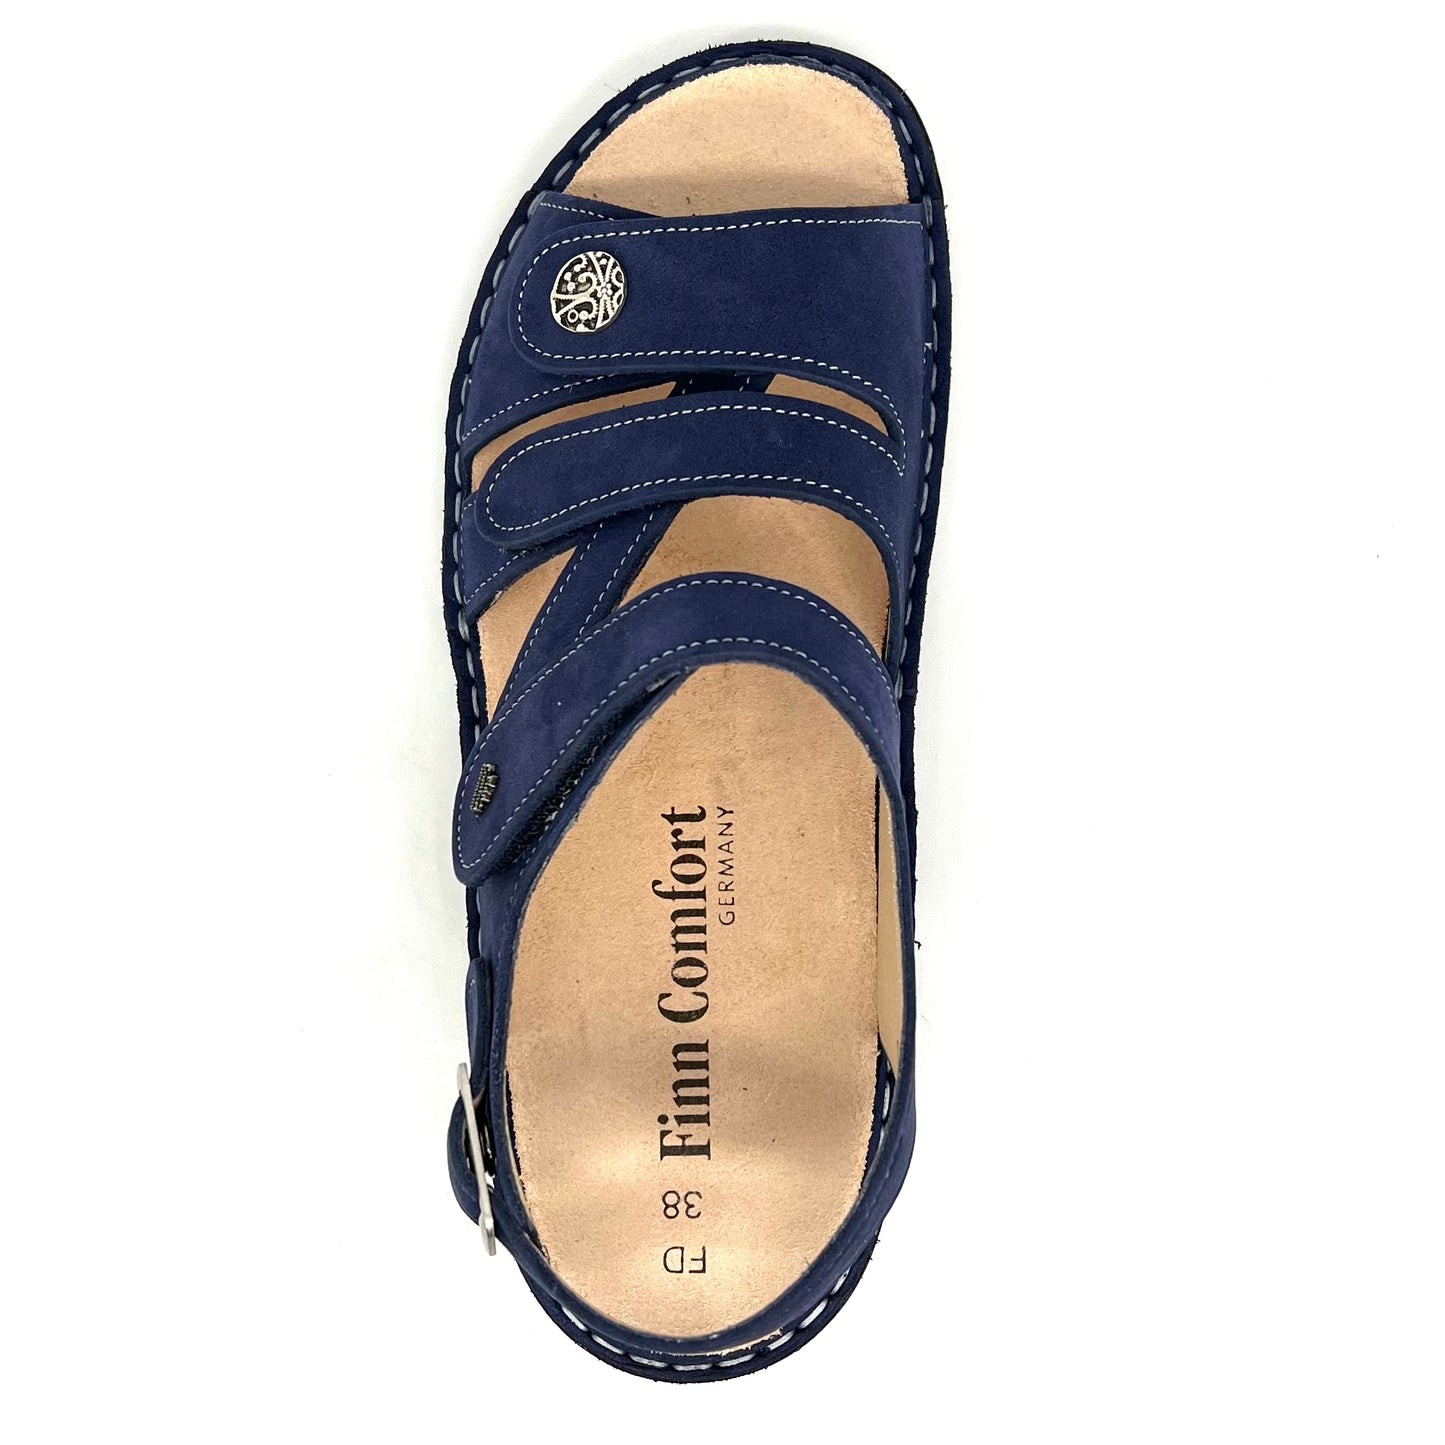 Damen Klett Sandalette Blau von Finn Comfort 17698